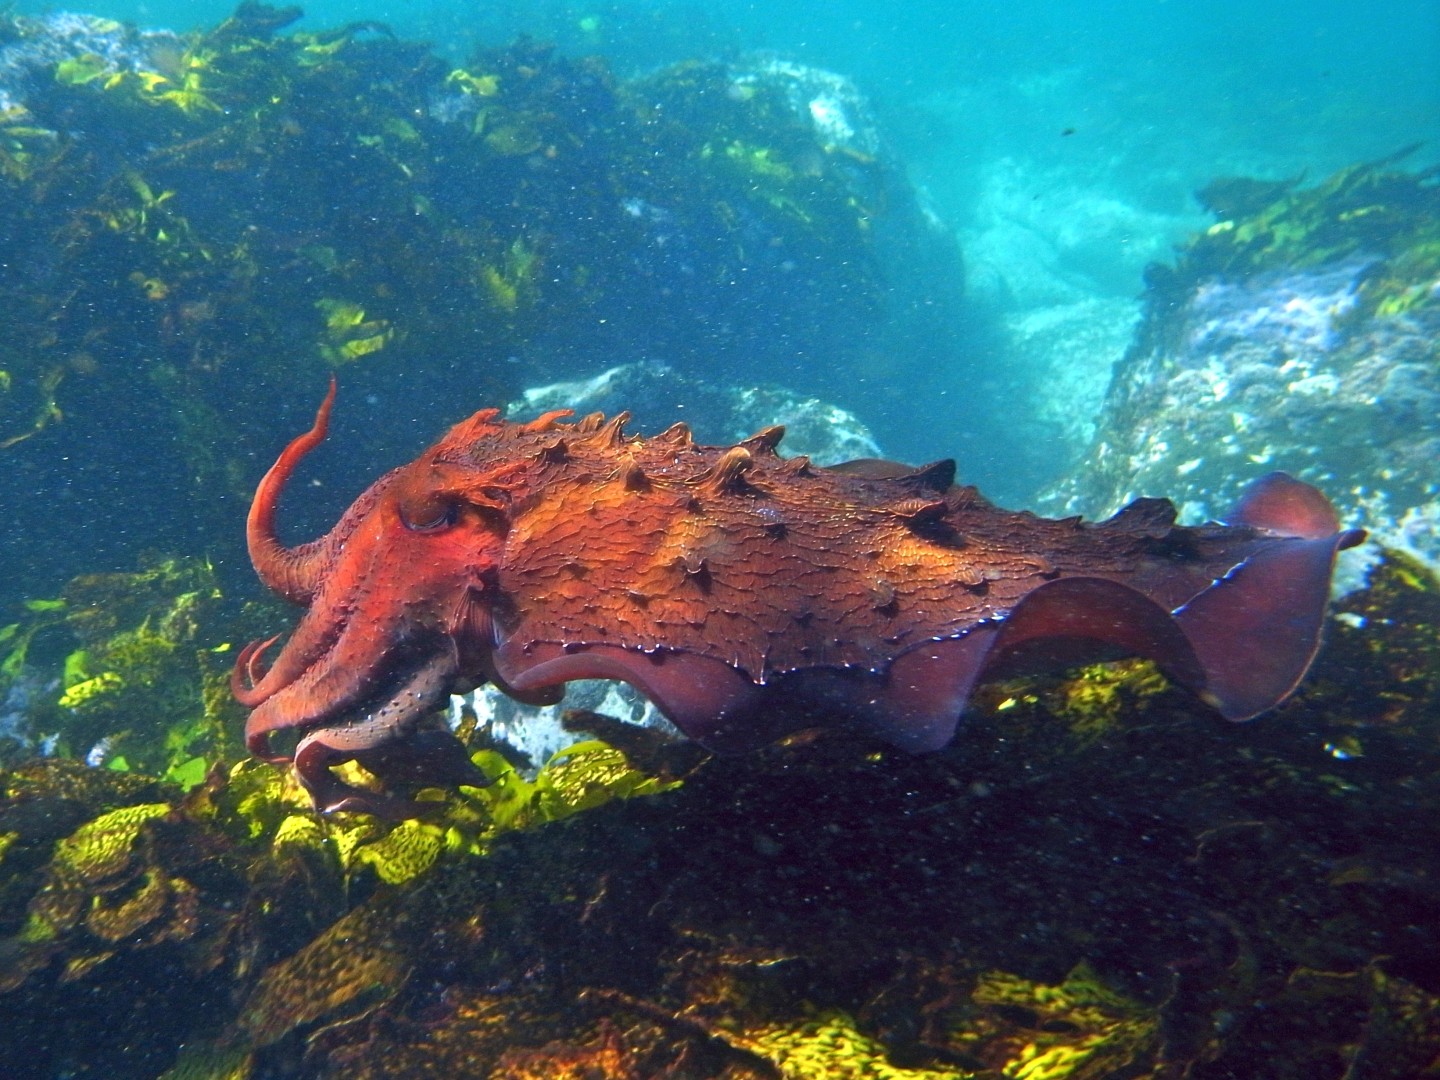 Giant cuttlefish (Sepia apama)